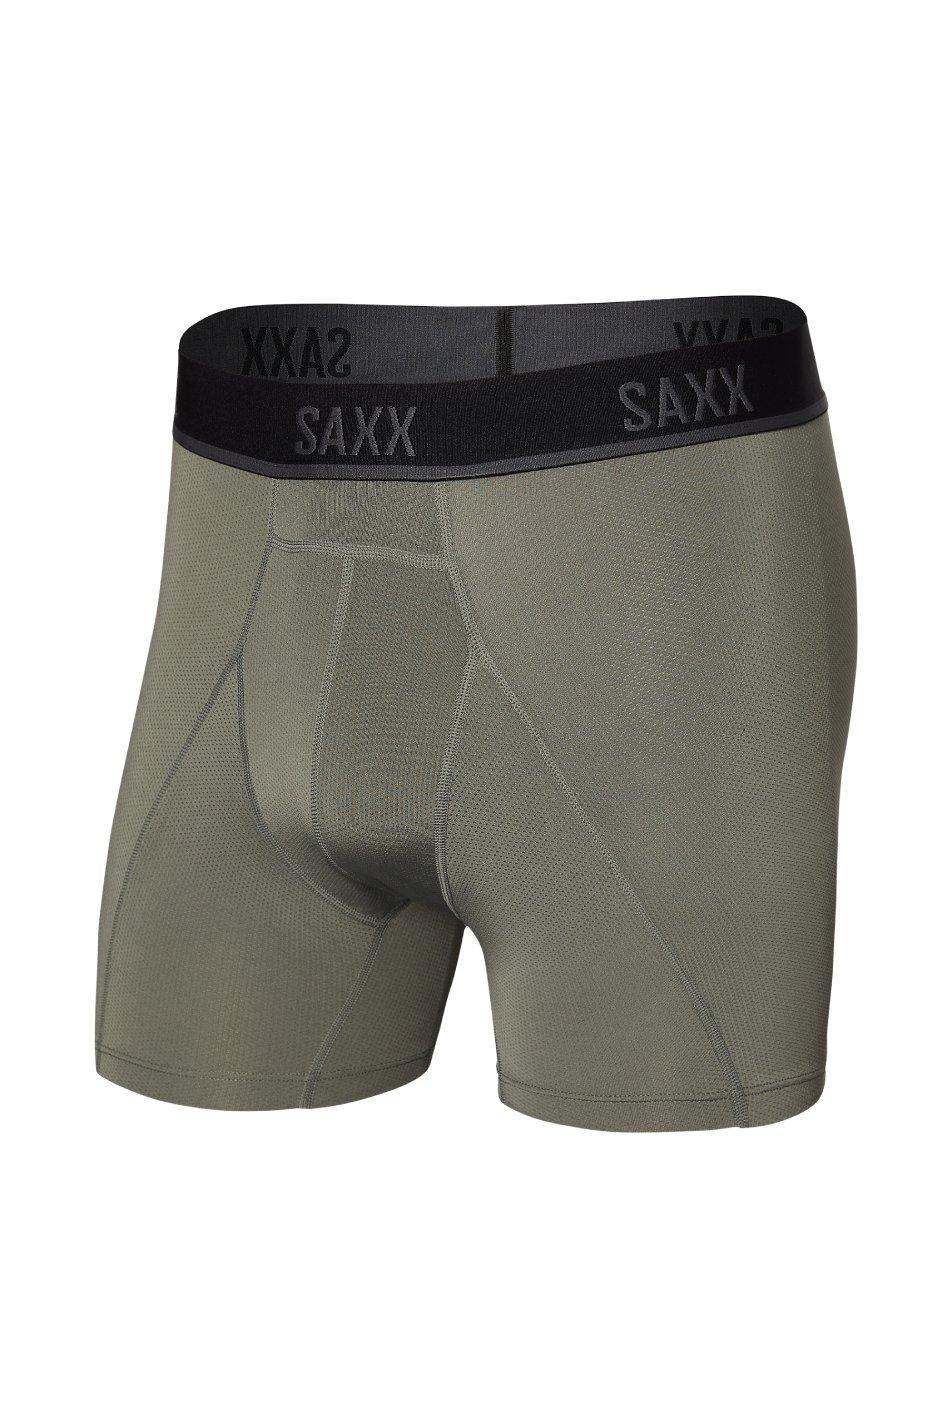 Underwear & Socks, Kinetic HD Boxer Brief